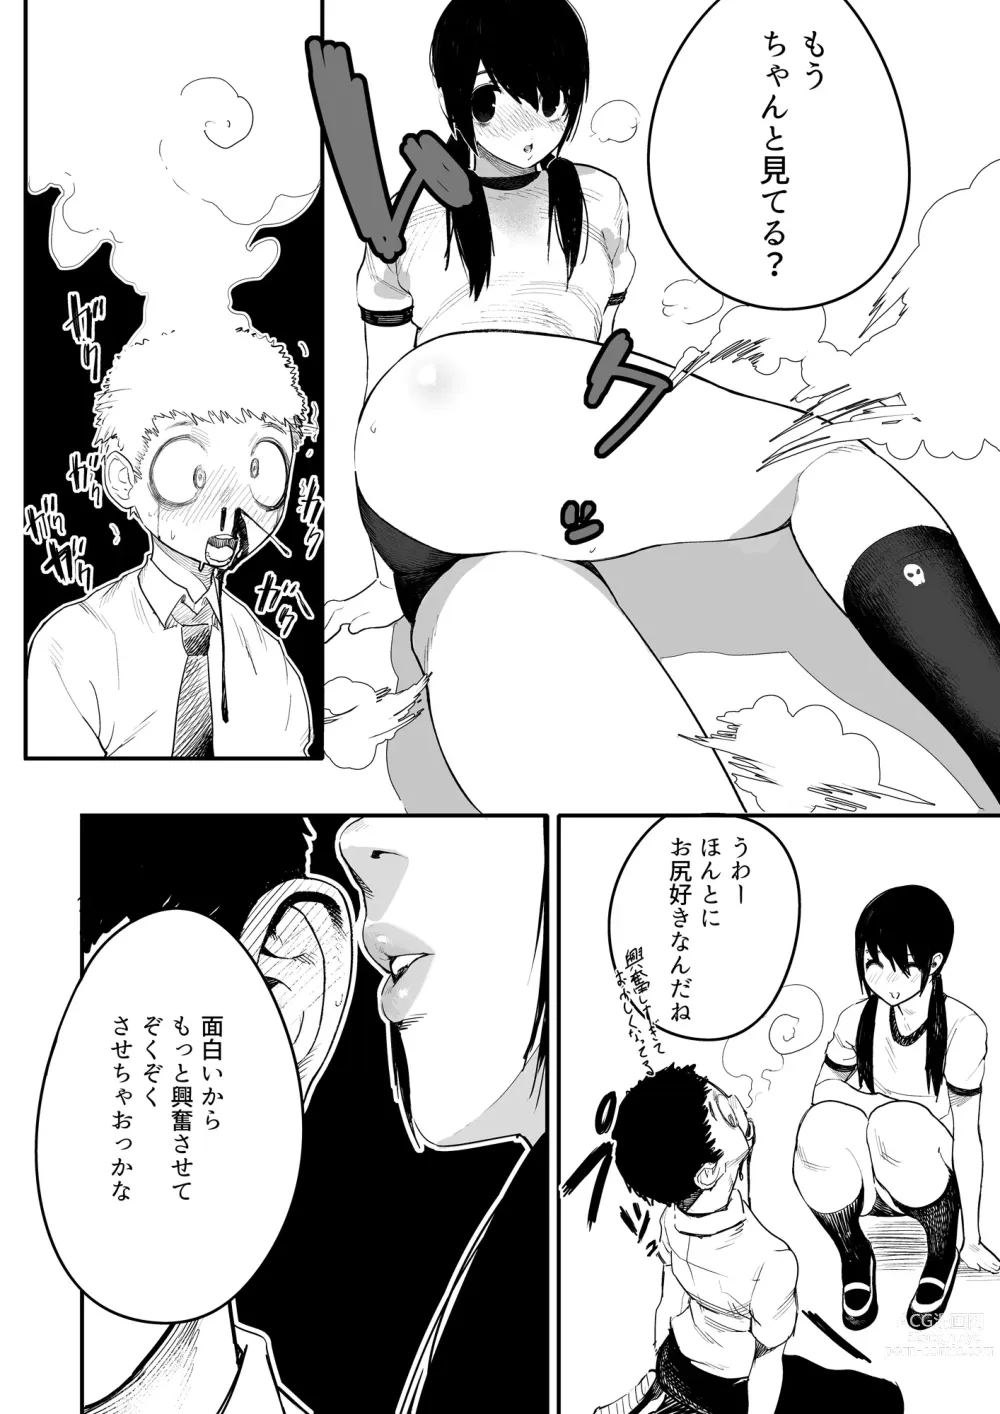 Page 6 of doujinshi Ijou Seiai Tenjou Denki